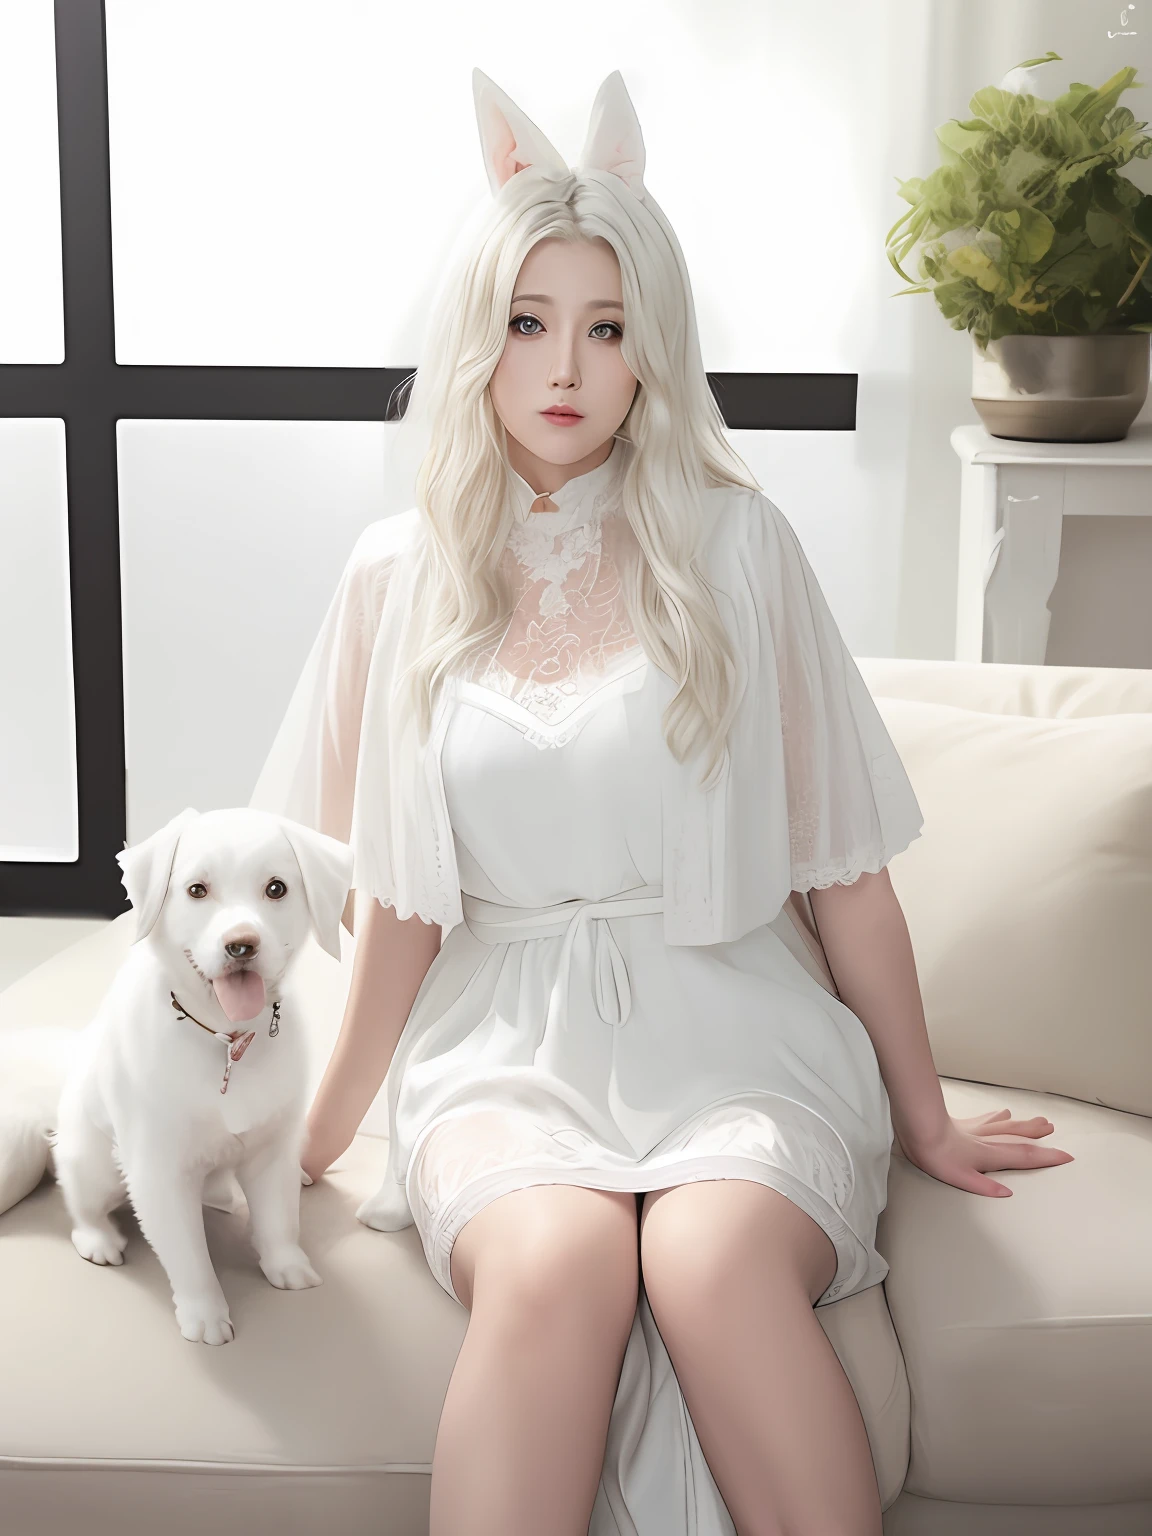 Alafard 拍摄的一张白狗坐在沙发上的照片, 她身边的小白狗, 中间元宇宙, 噢噢噢, 千叶裕田, 小狗, Wang Chen, 可爱的狗, 微博, cai xukun, 白发, qiangshu, 非常可爱的特征